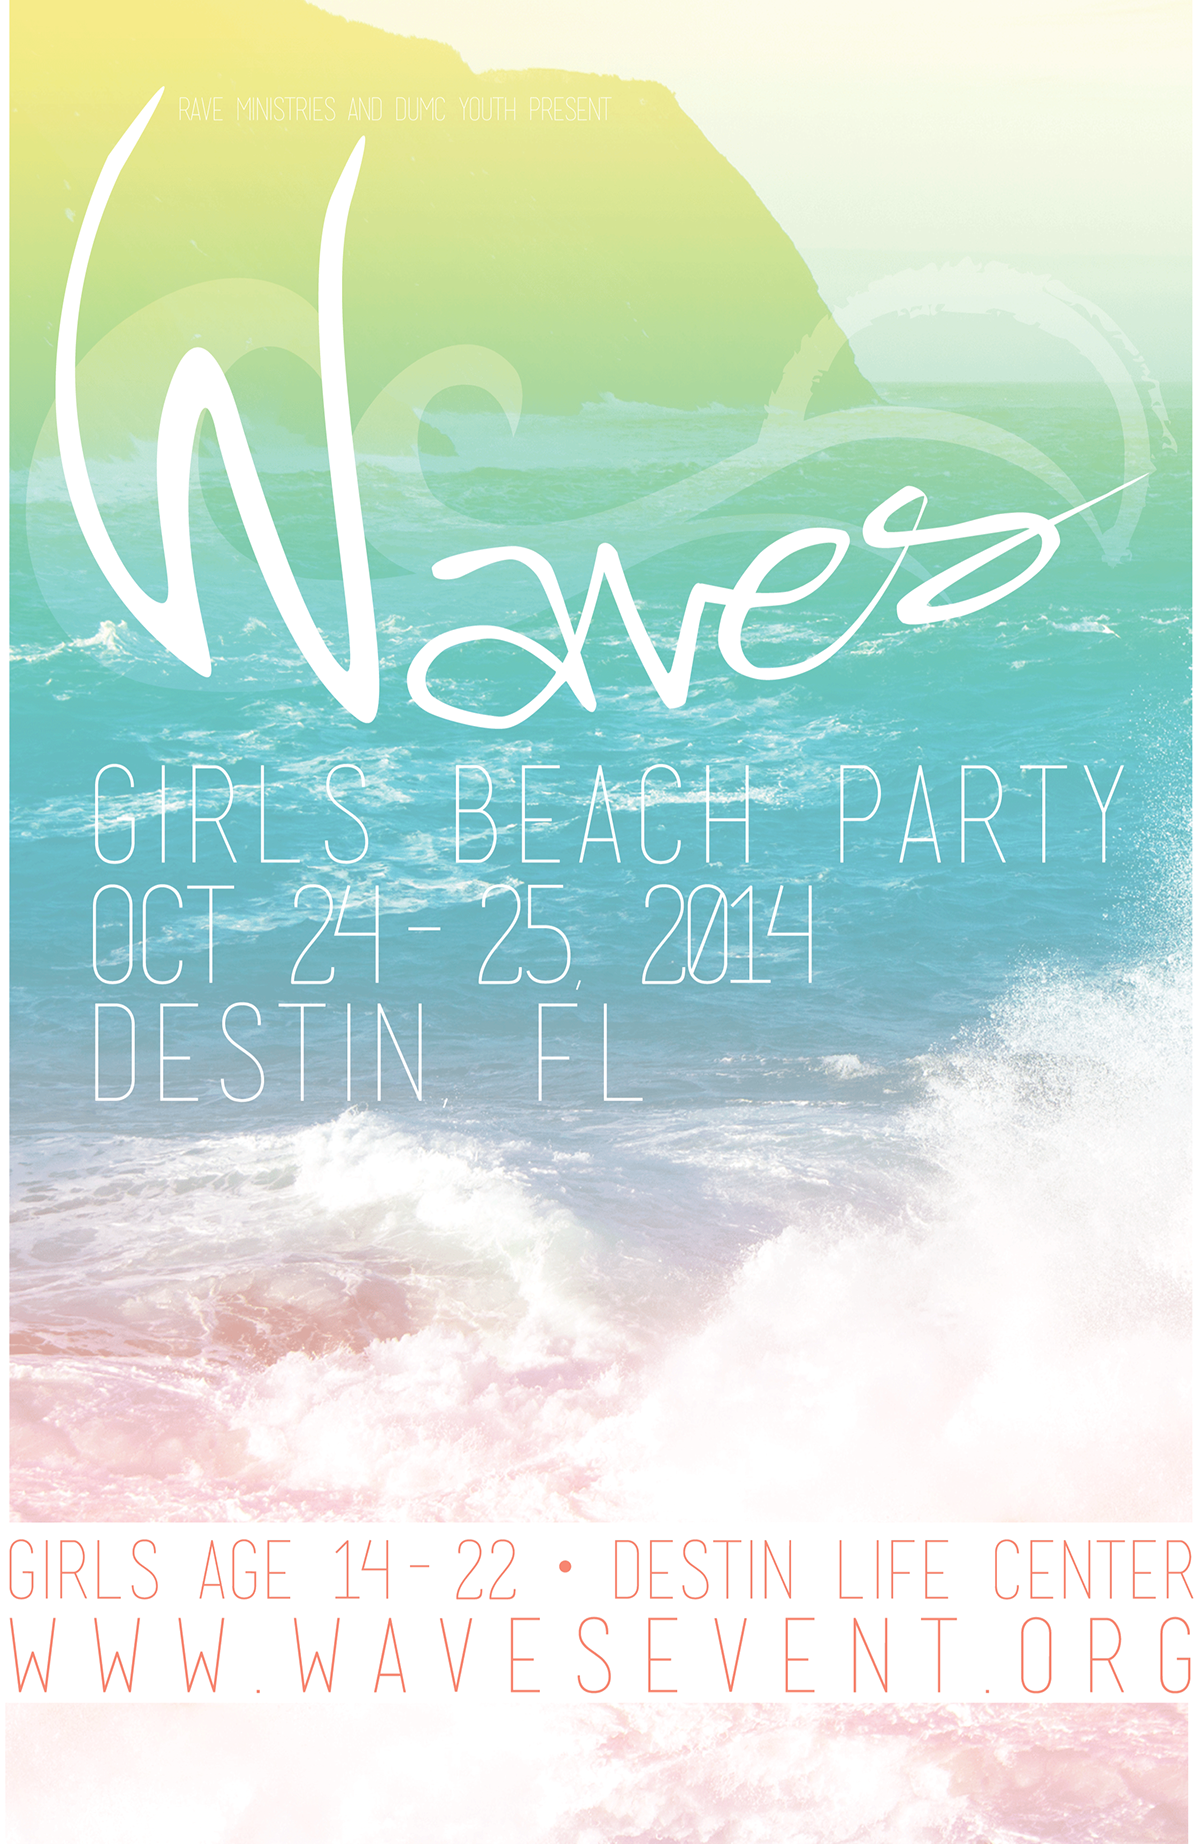 Waves Event Destin identity social media logo flyer poster DUMC Youth Group RAVE Ministries